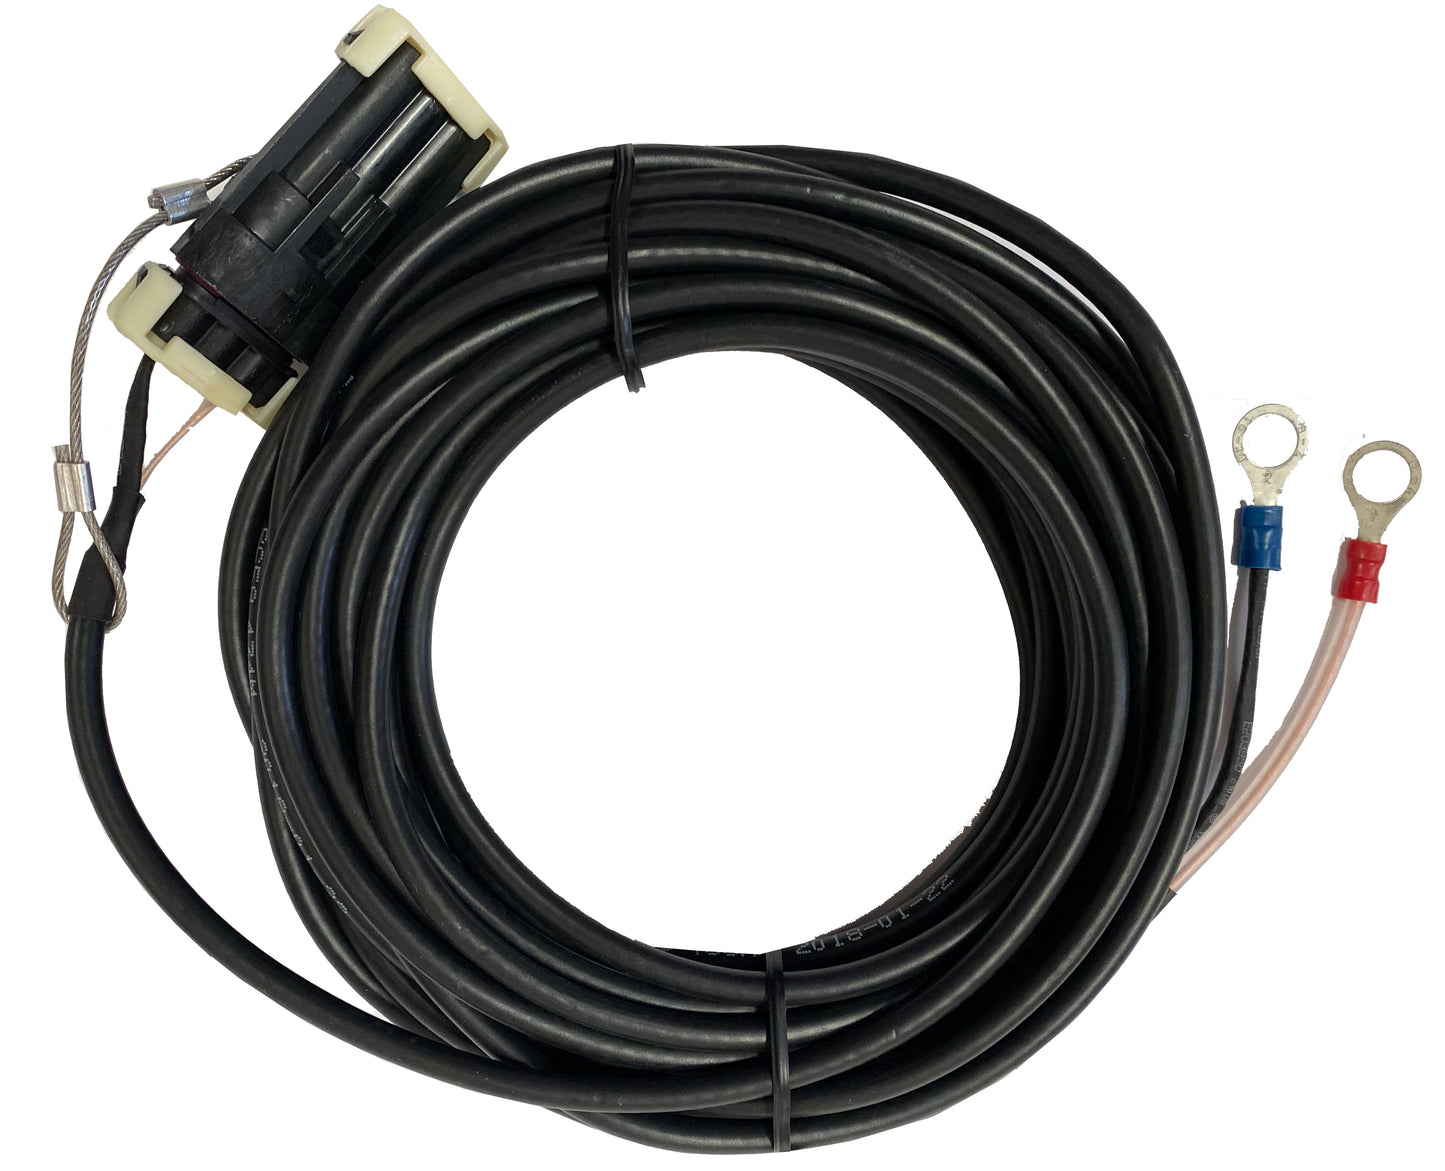 Baler (2177) Moisture Sensor Cable - 7.6M (LGE EYELET)